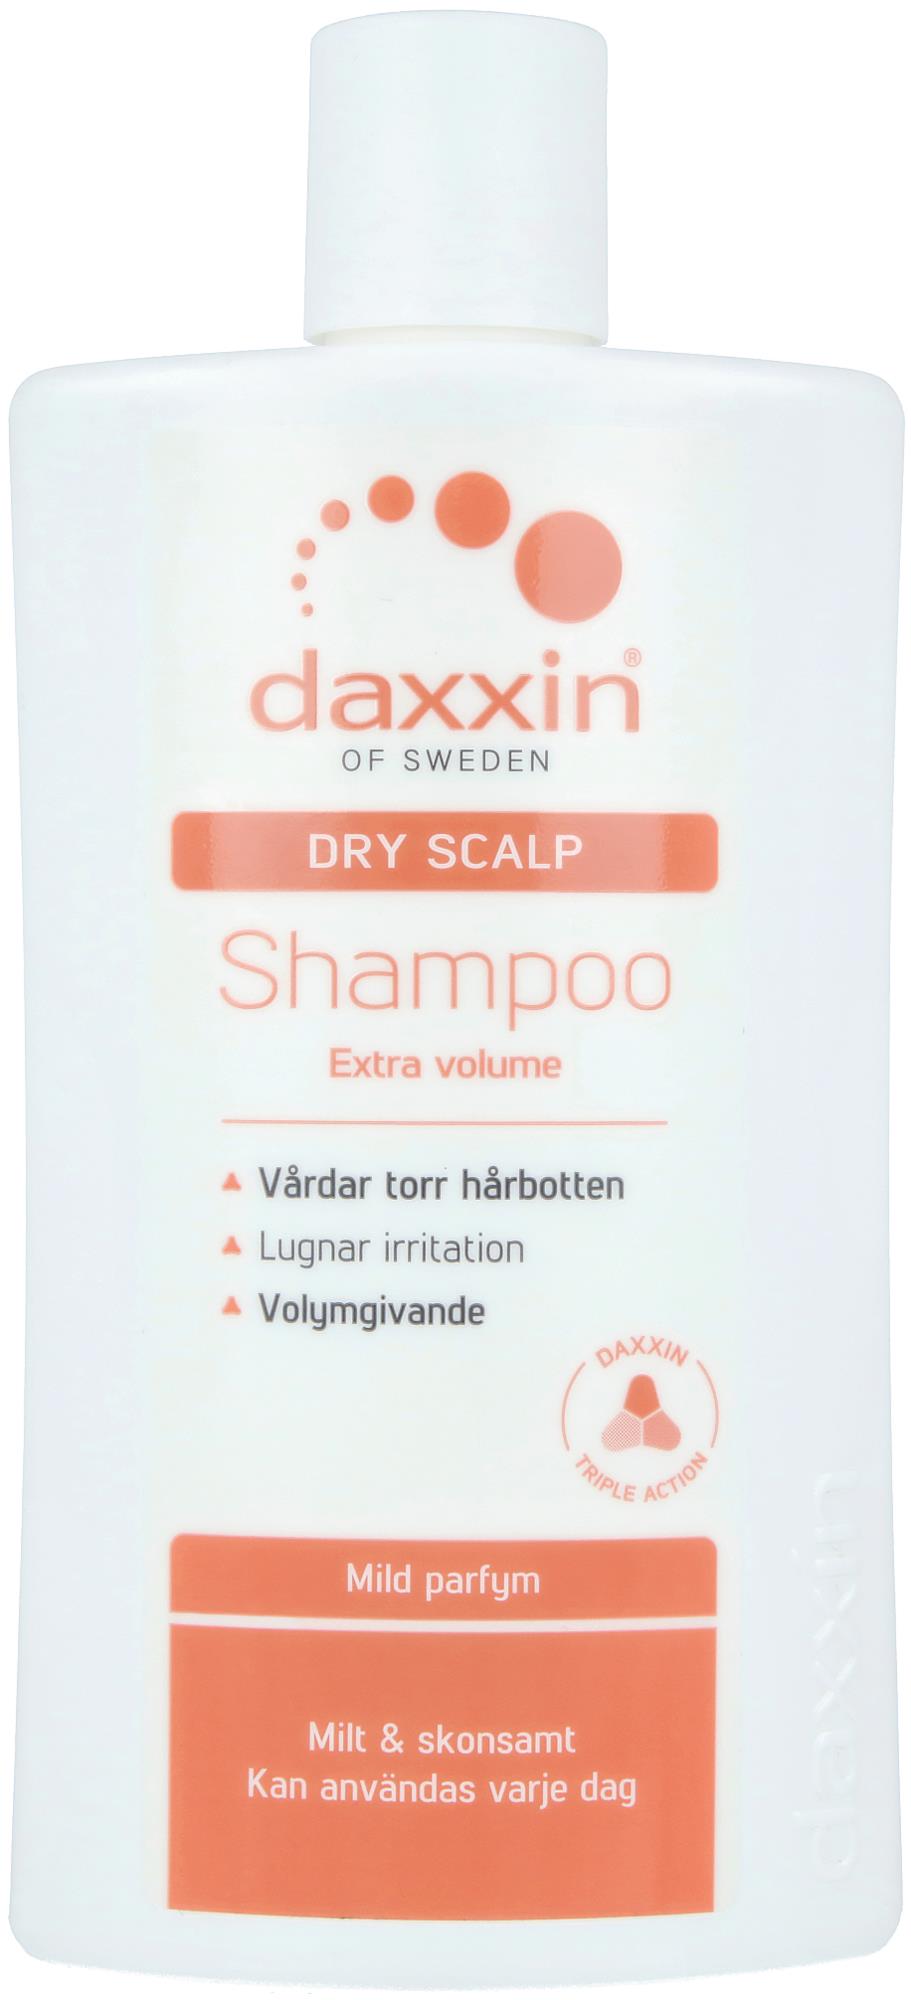 Skylight arsenal Inhibere Daxxin Shampoo Extra Volume 250 ml | lyko.com